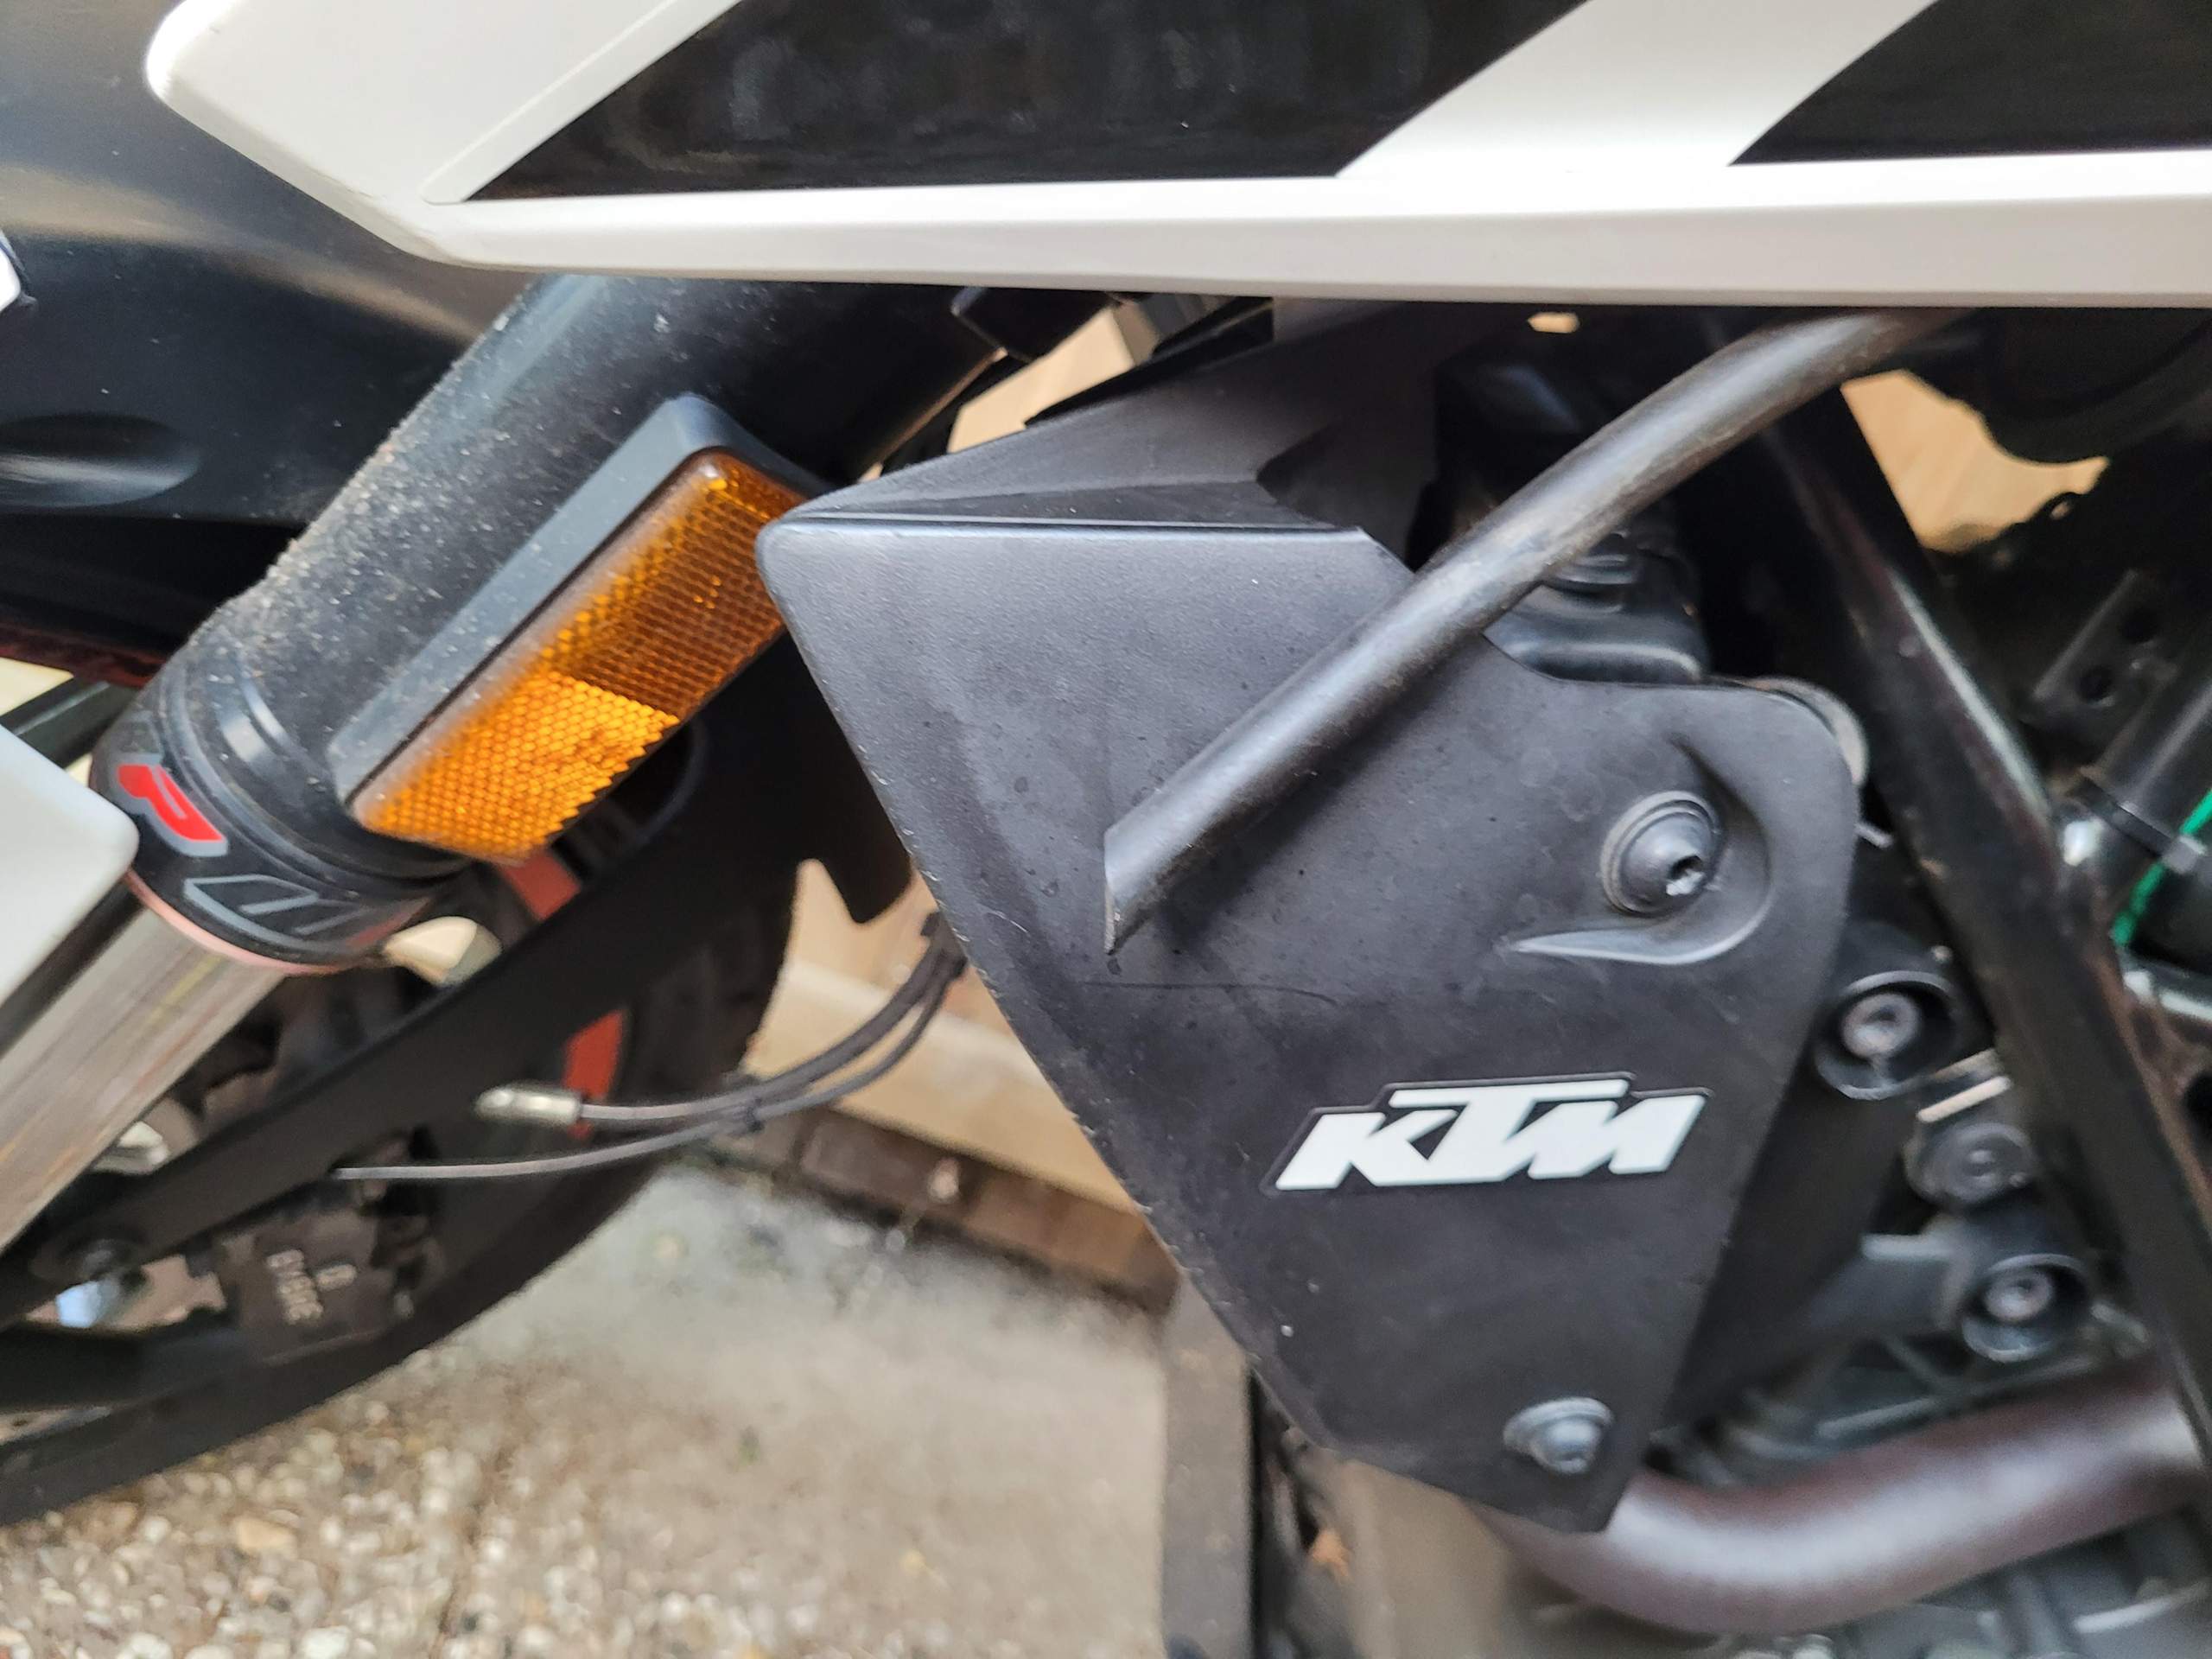 Motorrad schlauch hängt raus? (KTM, KTM Duke 125)